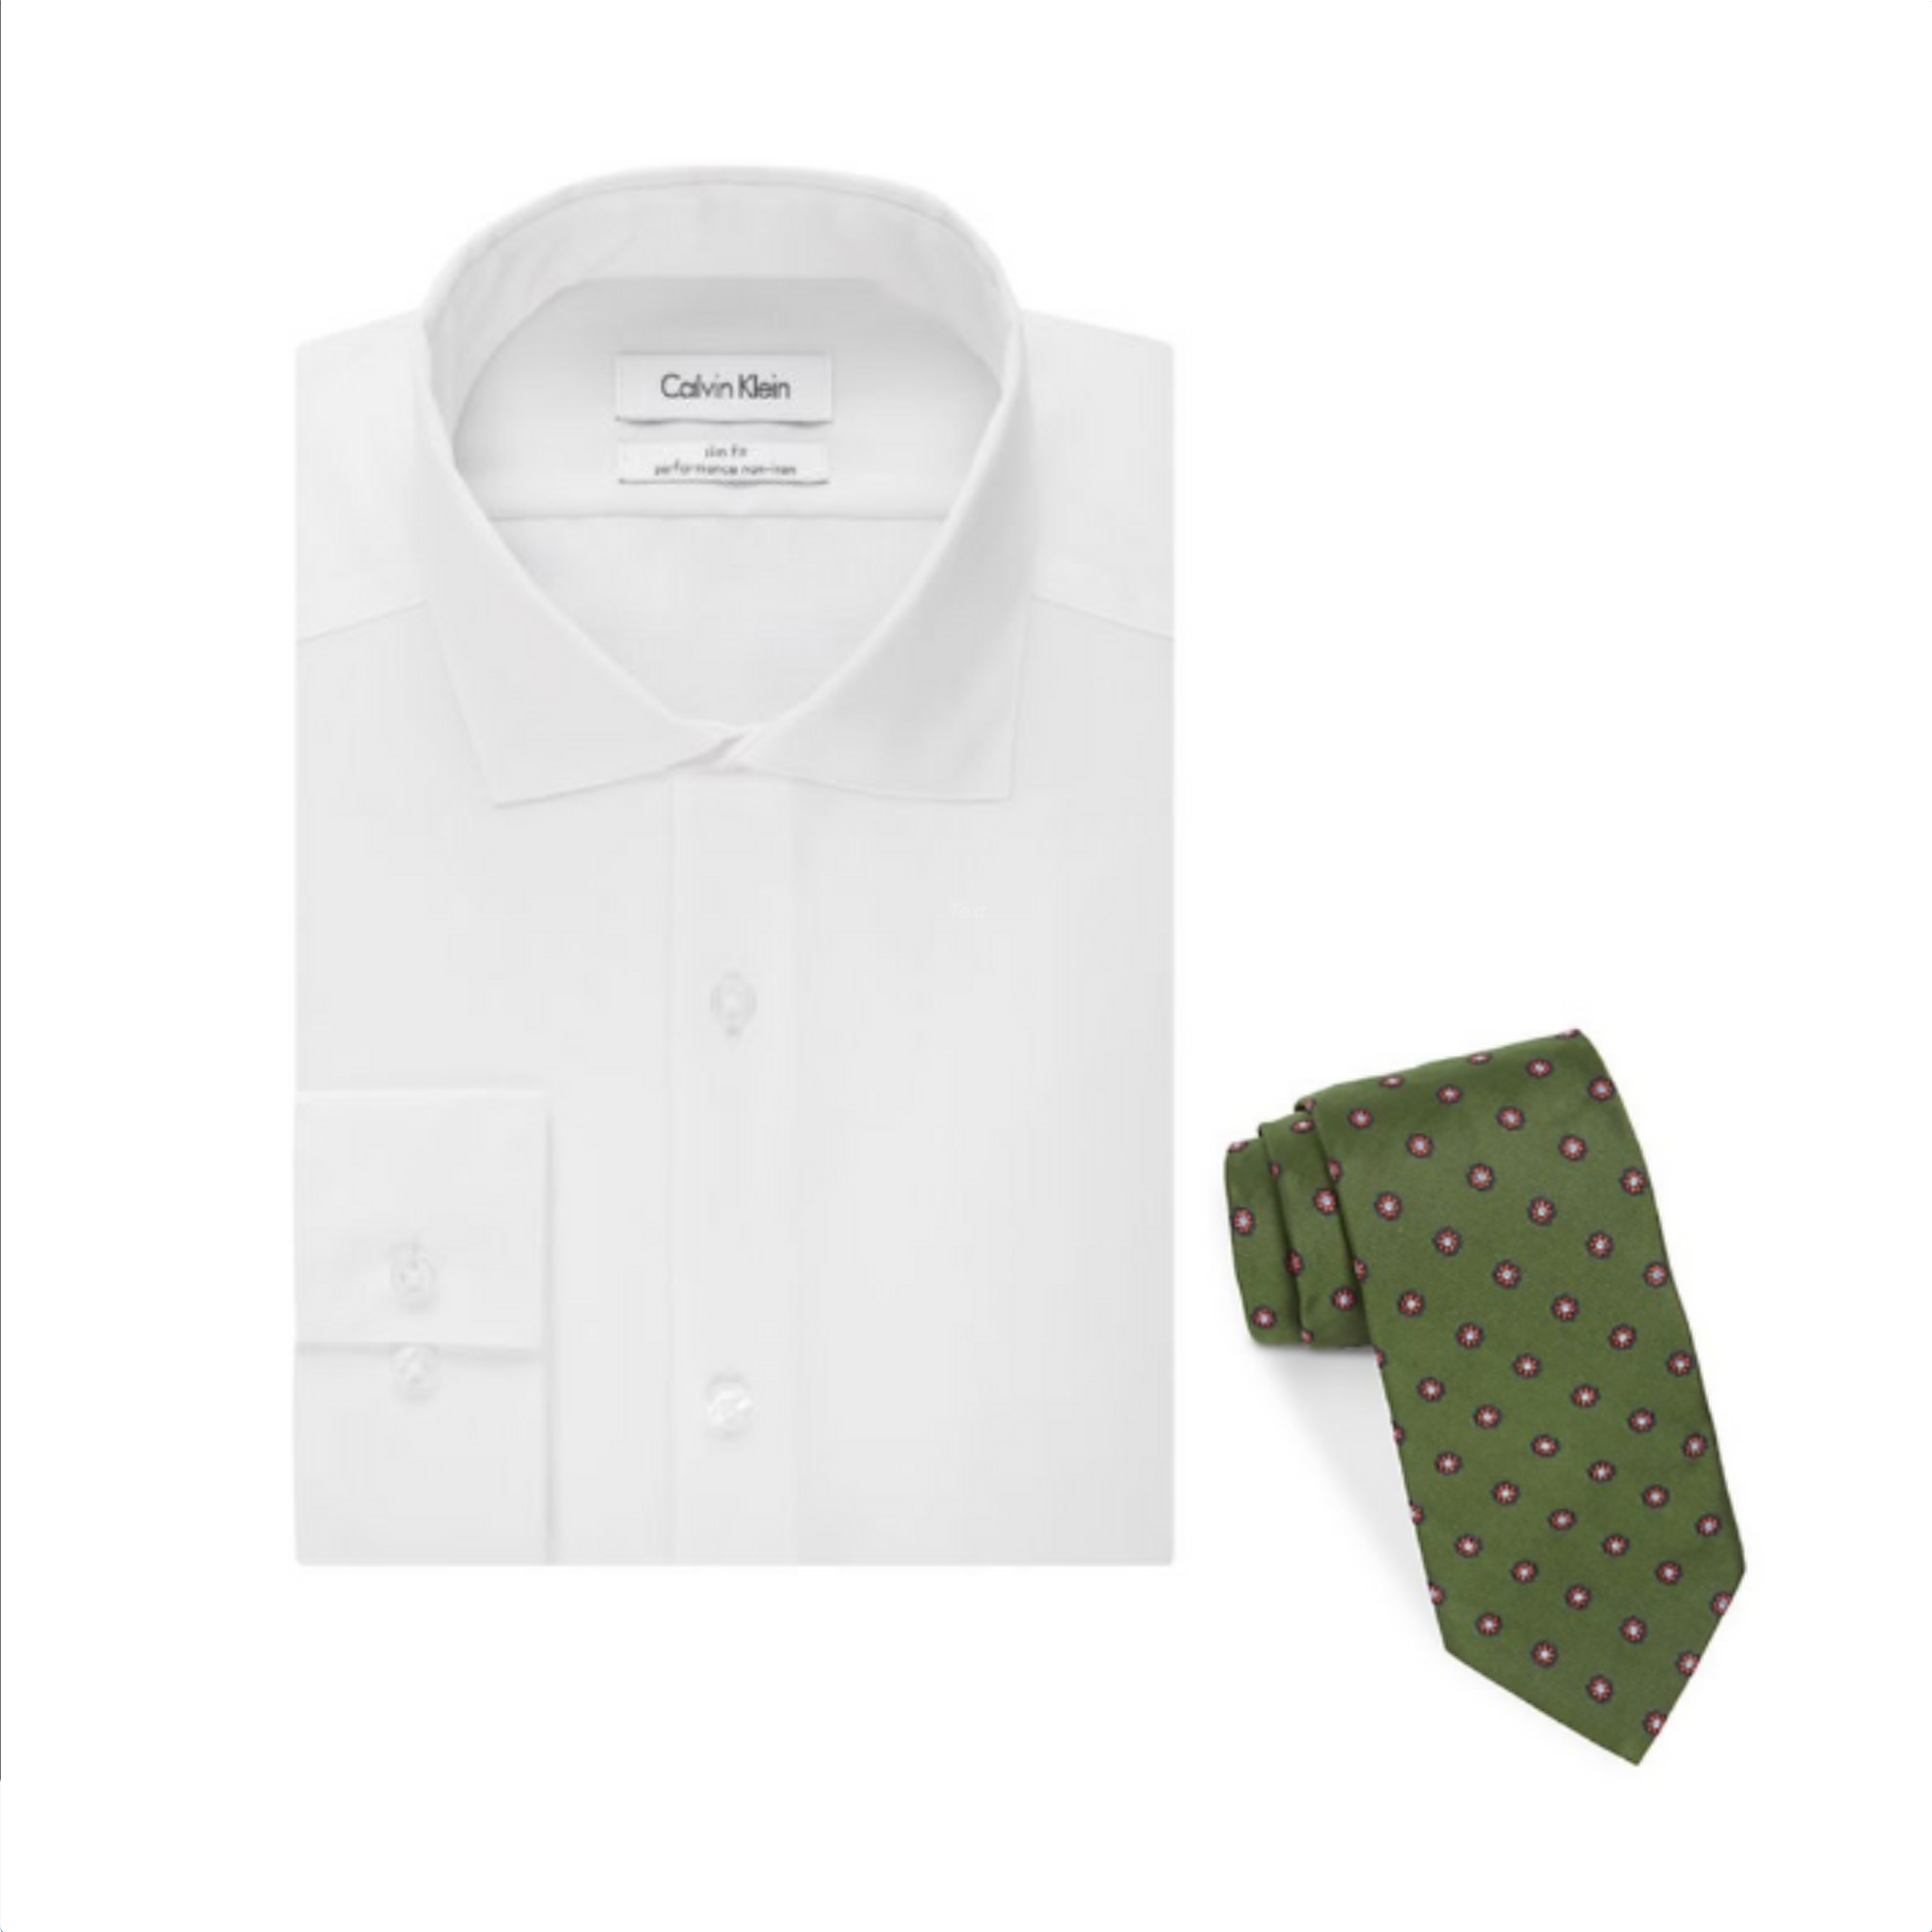 Calvin Klein Shirt + Brooks Brothers Tie